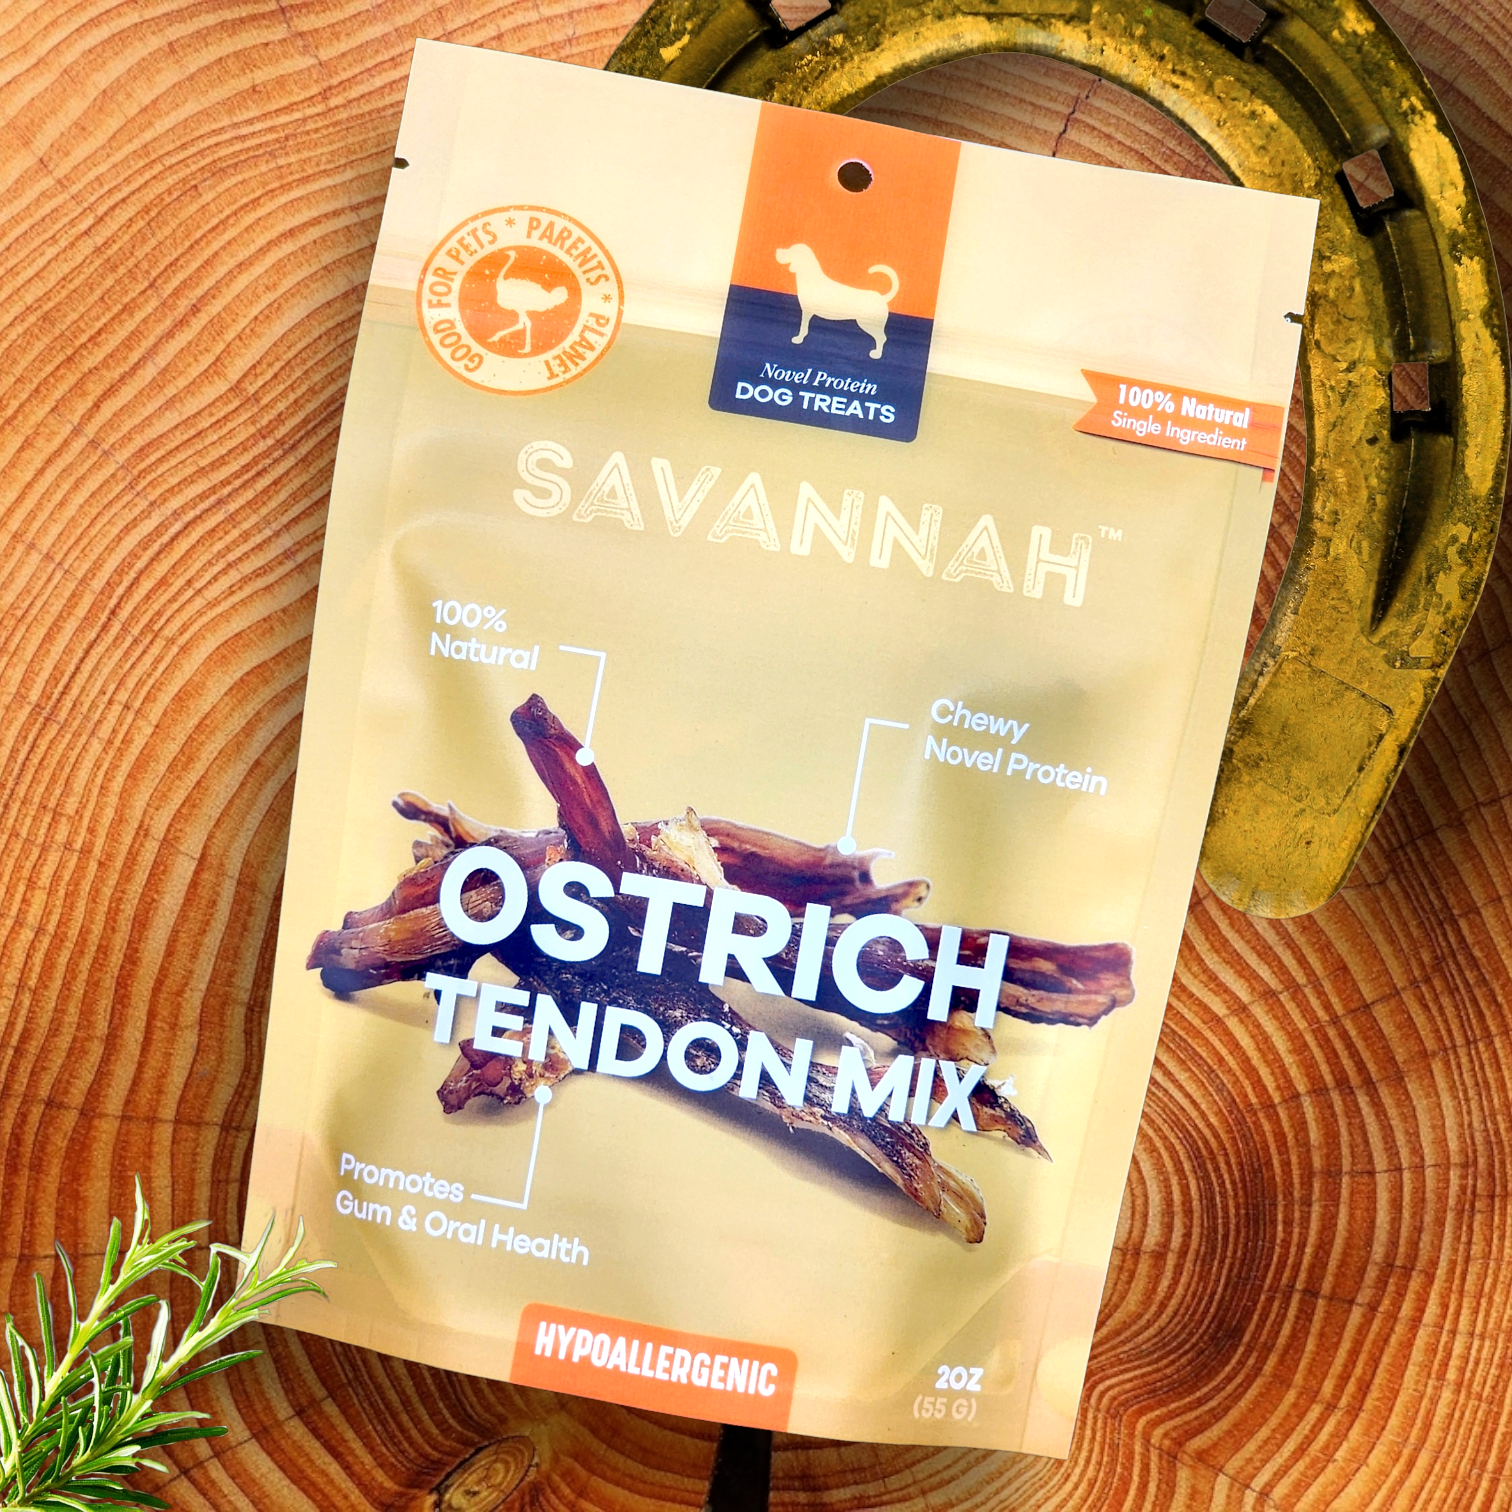 Savannah Pet Food Ostrich Tendon Mix Single ingredient Novel Protein Dog Treat